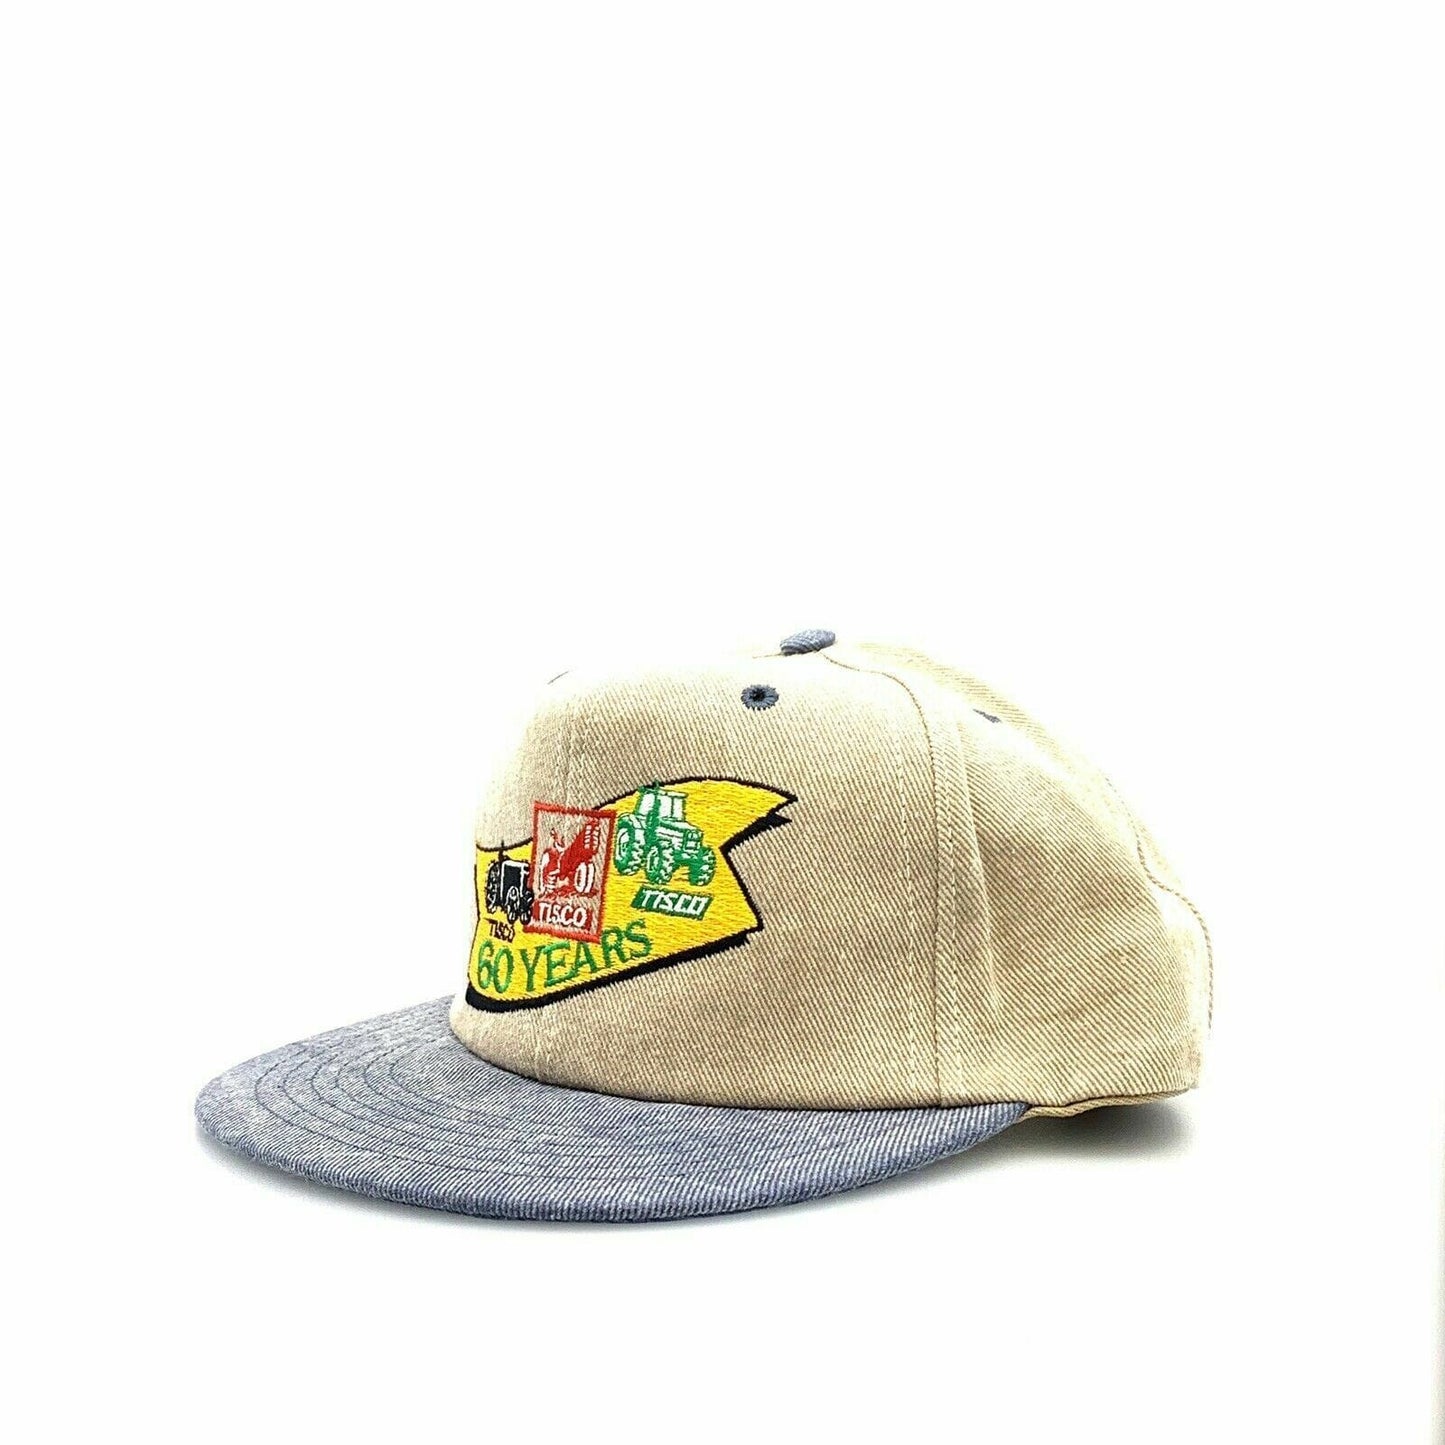 Crown Mfg TISCO 60 YEARS Commemorative Dad Baseball Hat, Beige - OSFA